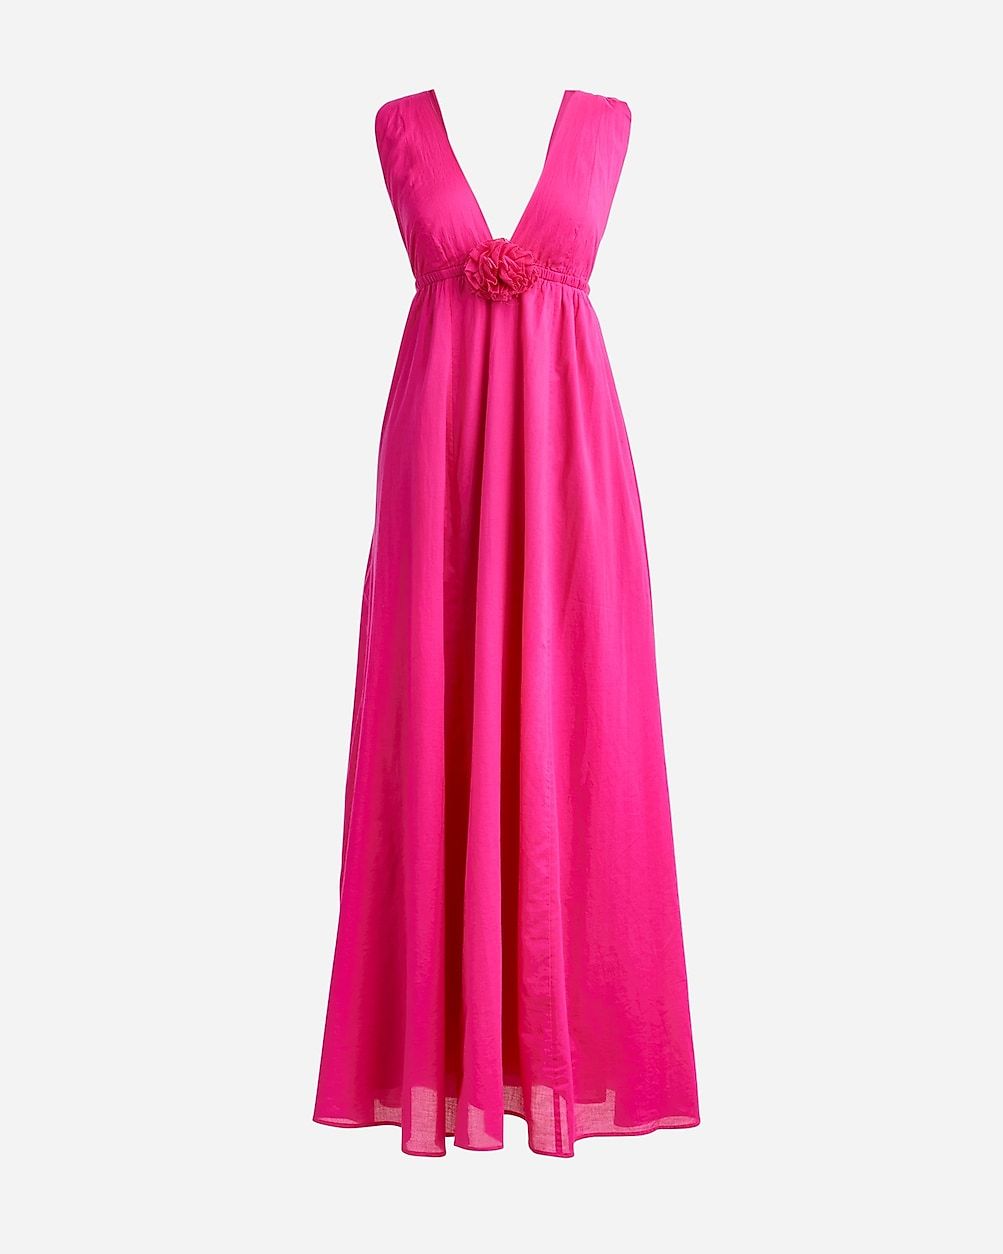 Rosette plunge dress in cotton voile | J.Crew US